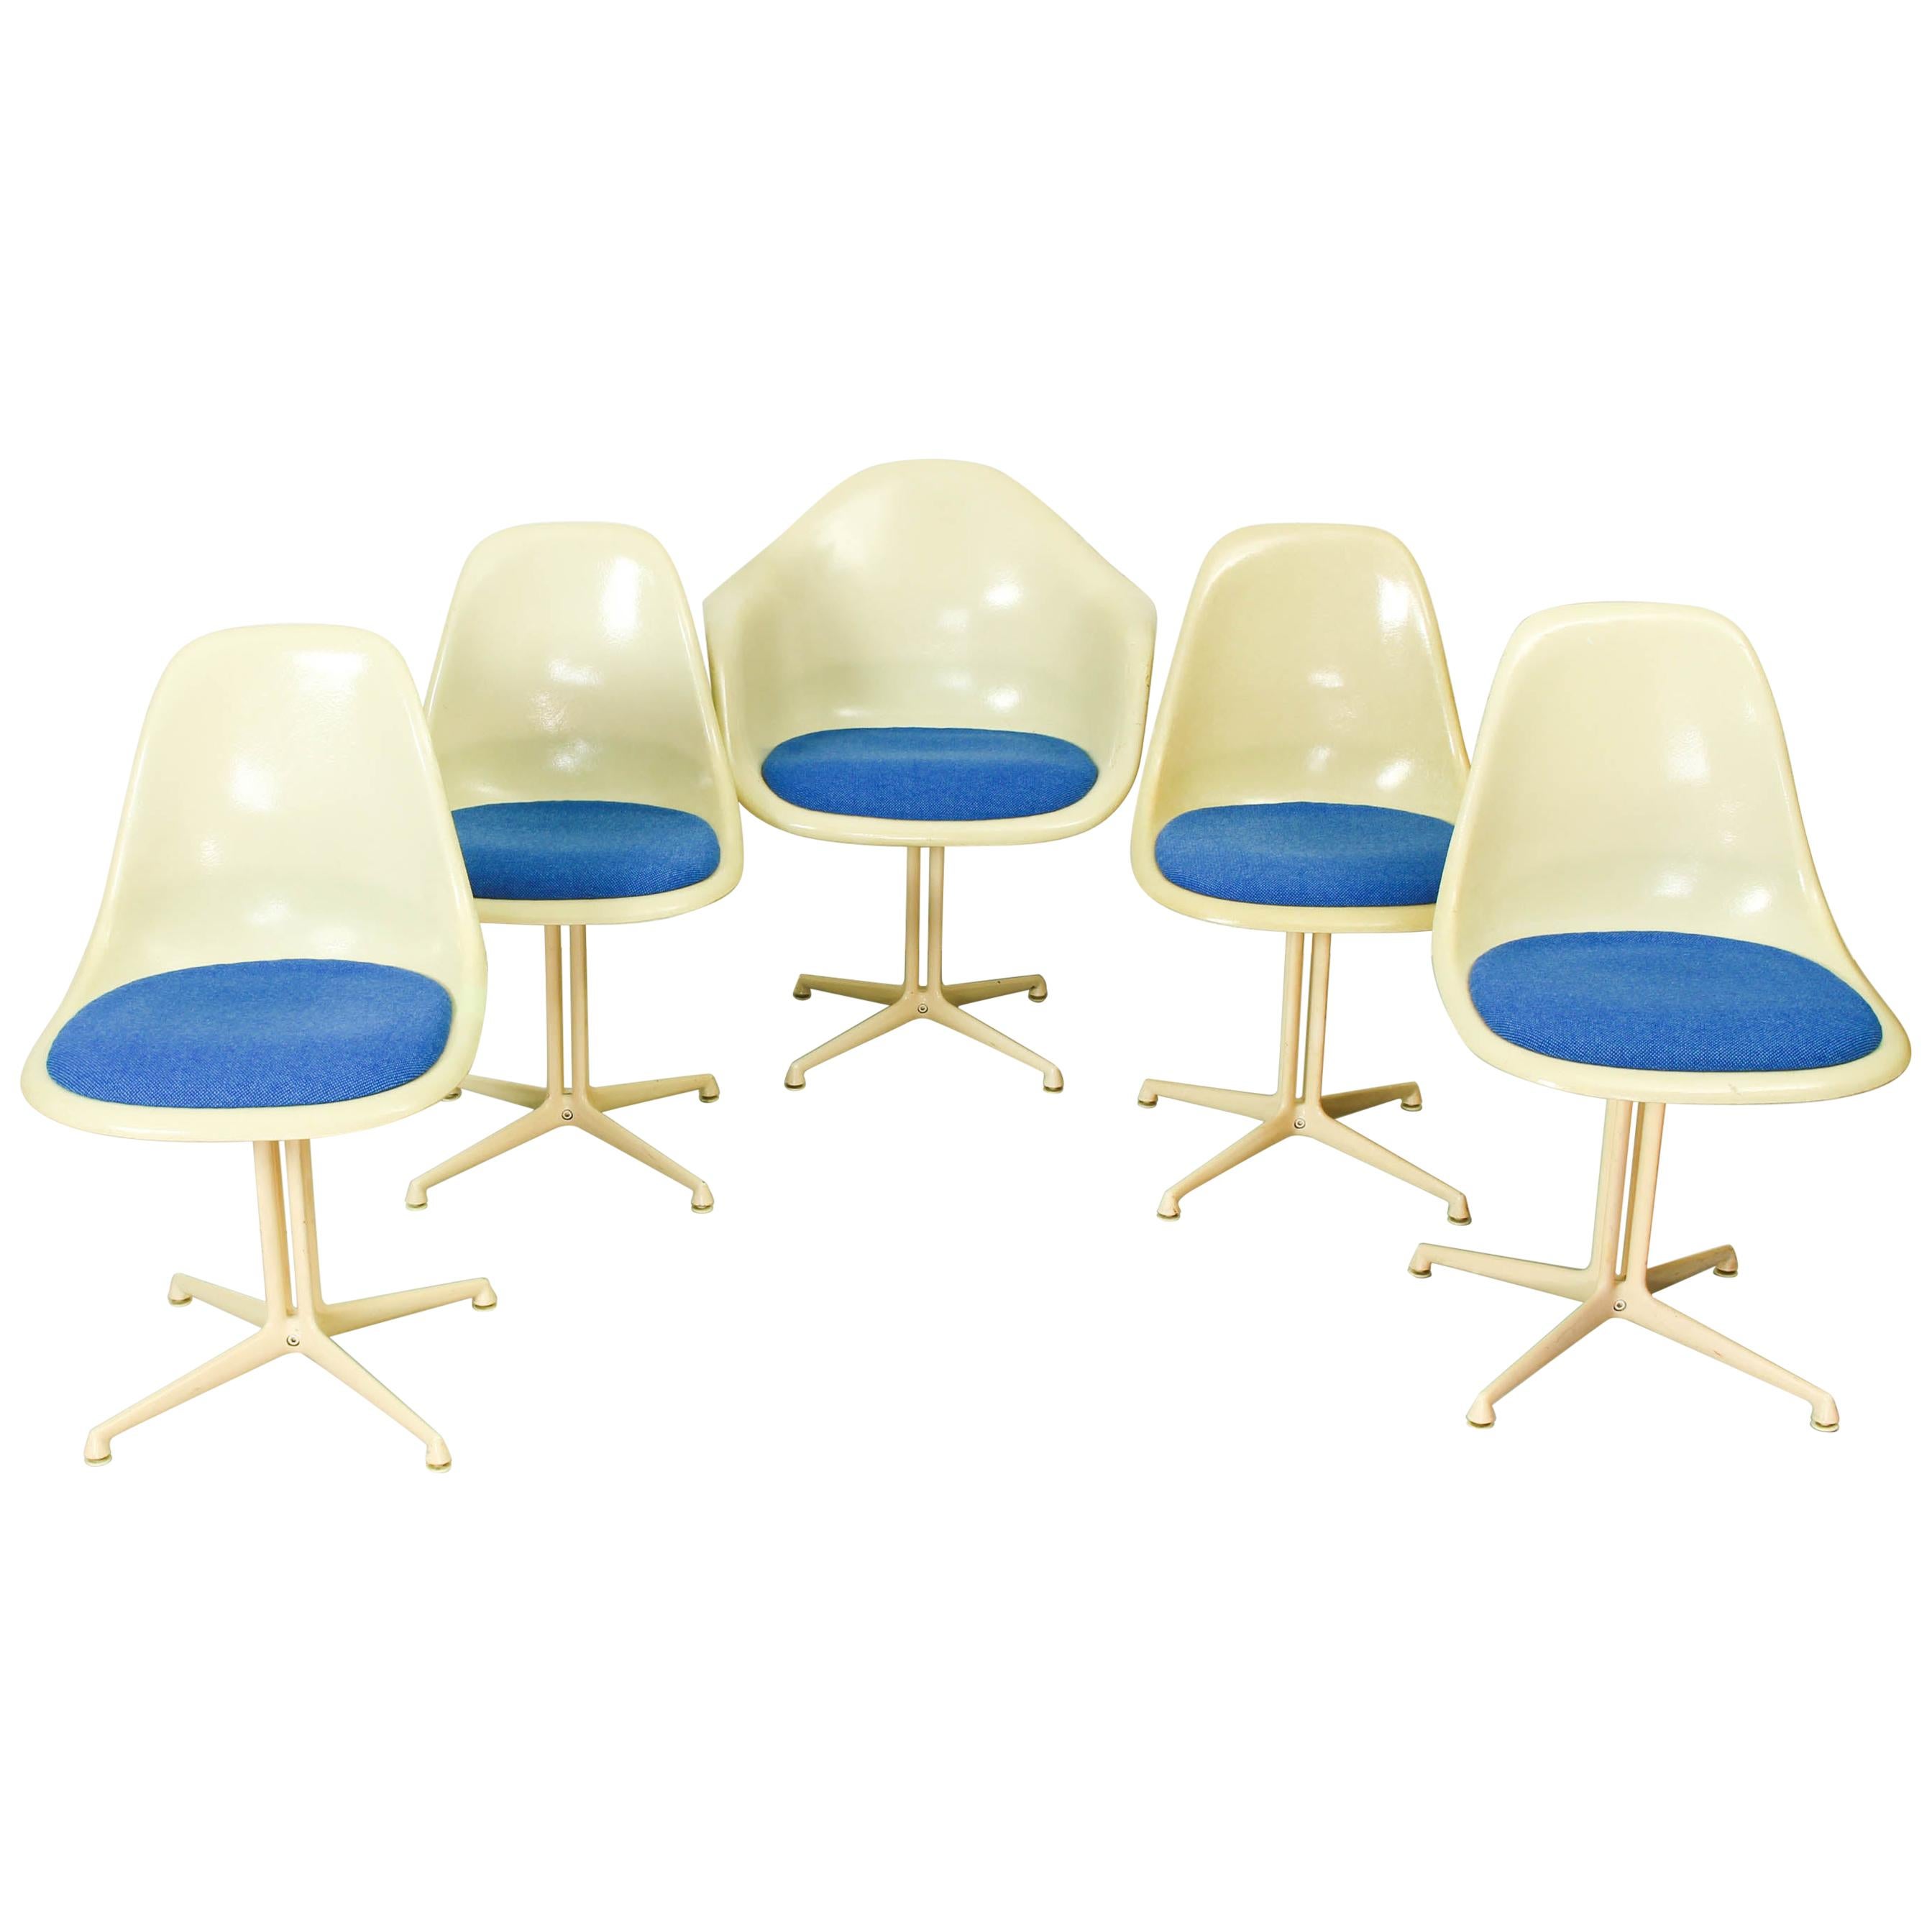 Set of 4 La Fonda Fiberglass Chairs and 1 La Fonda Fiberglass Armchair, Designed